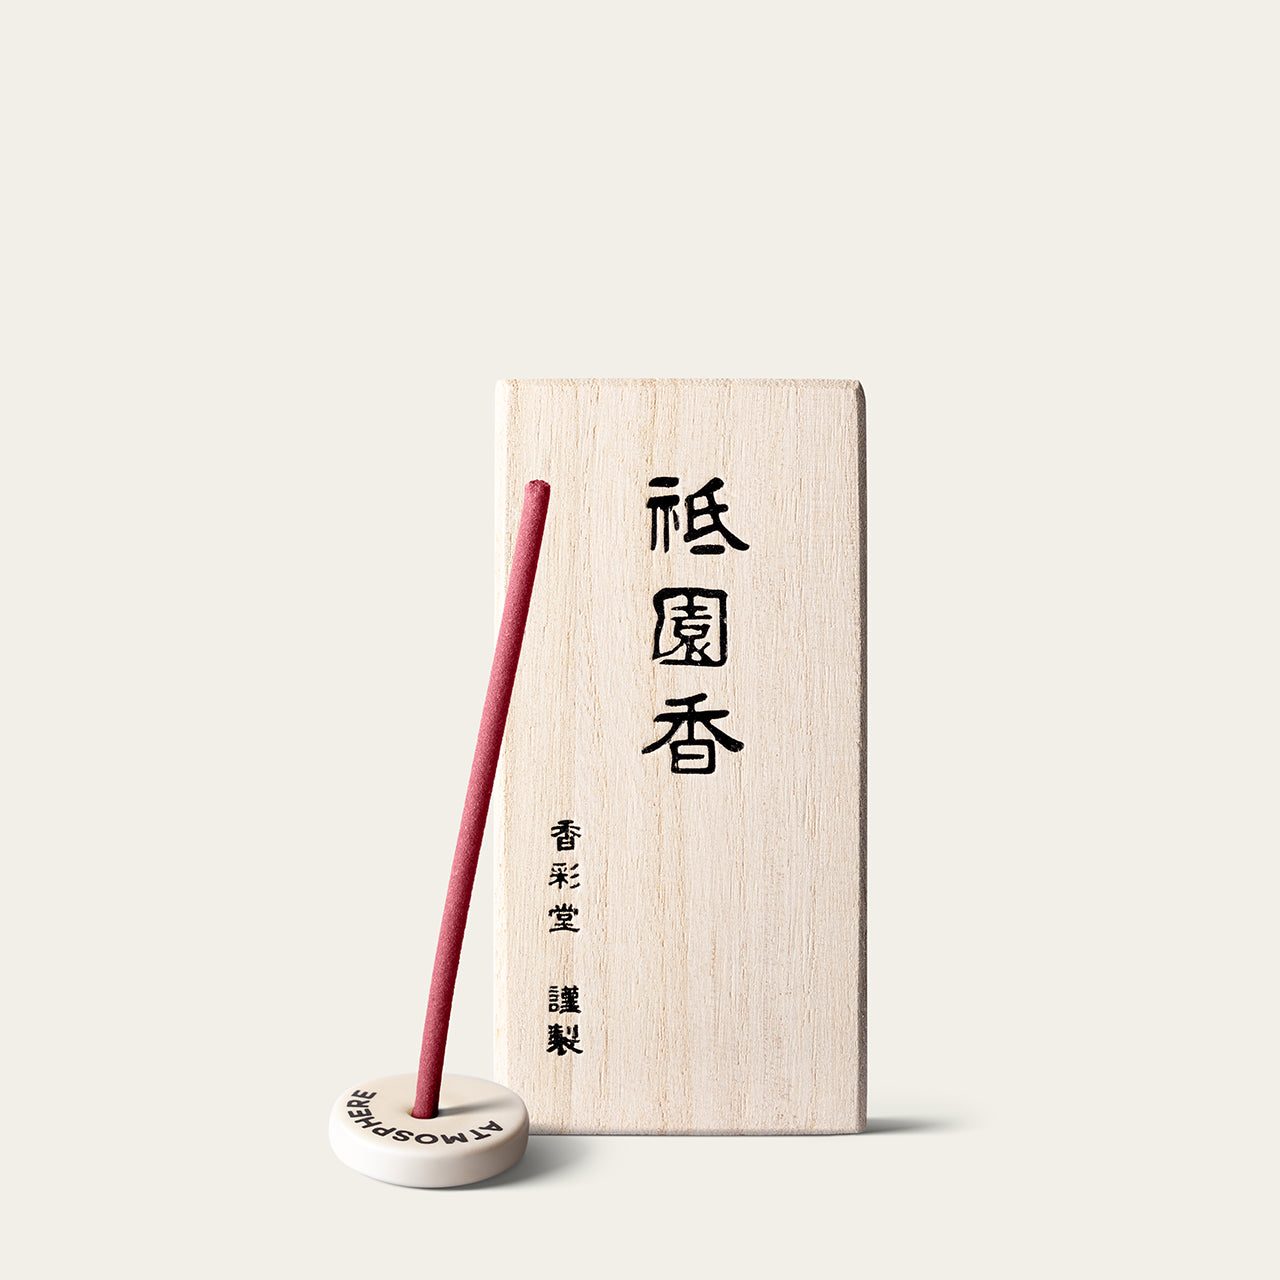 Kousaido Scenic Charm Flowers of Gion Japanese incense sticks (30 sticks) with Atmosphere ceramic incense holder